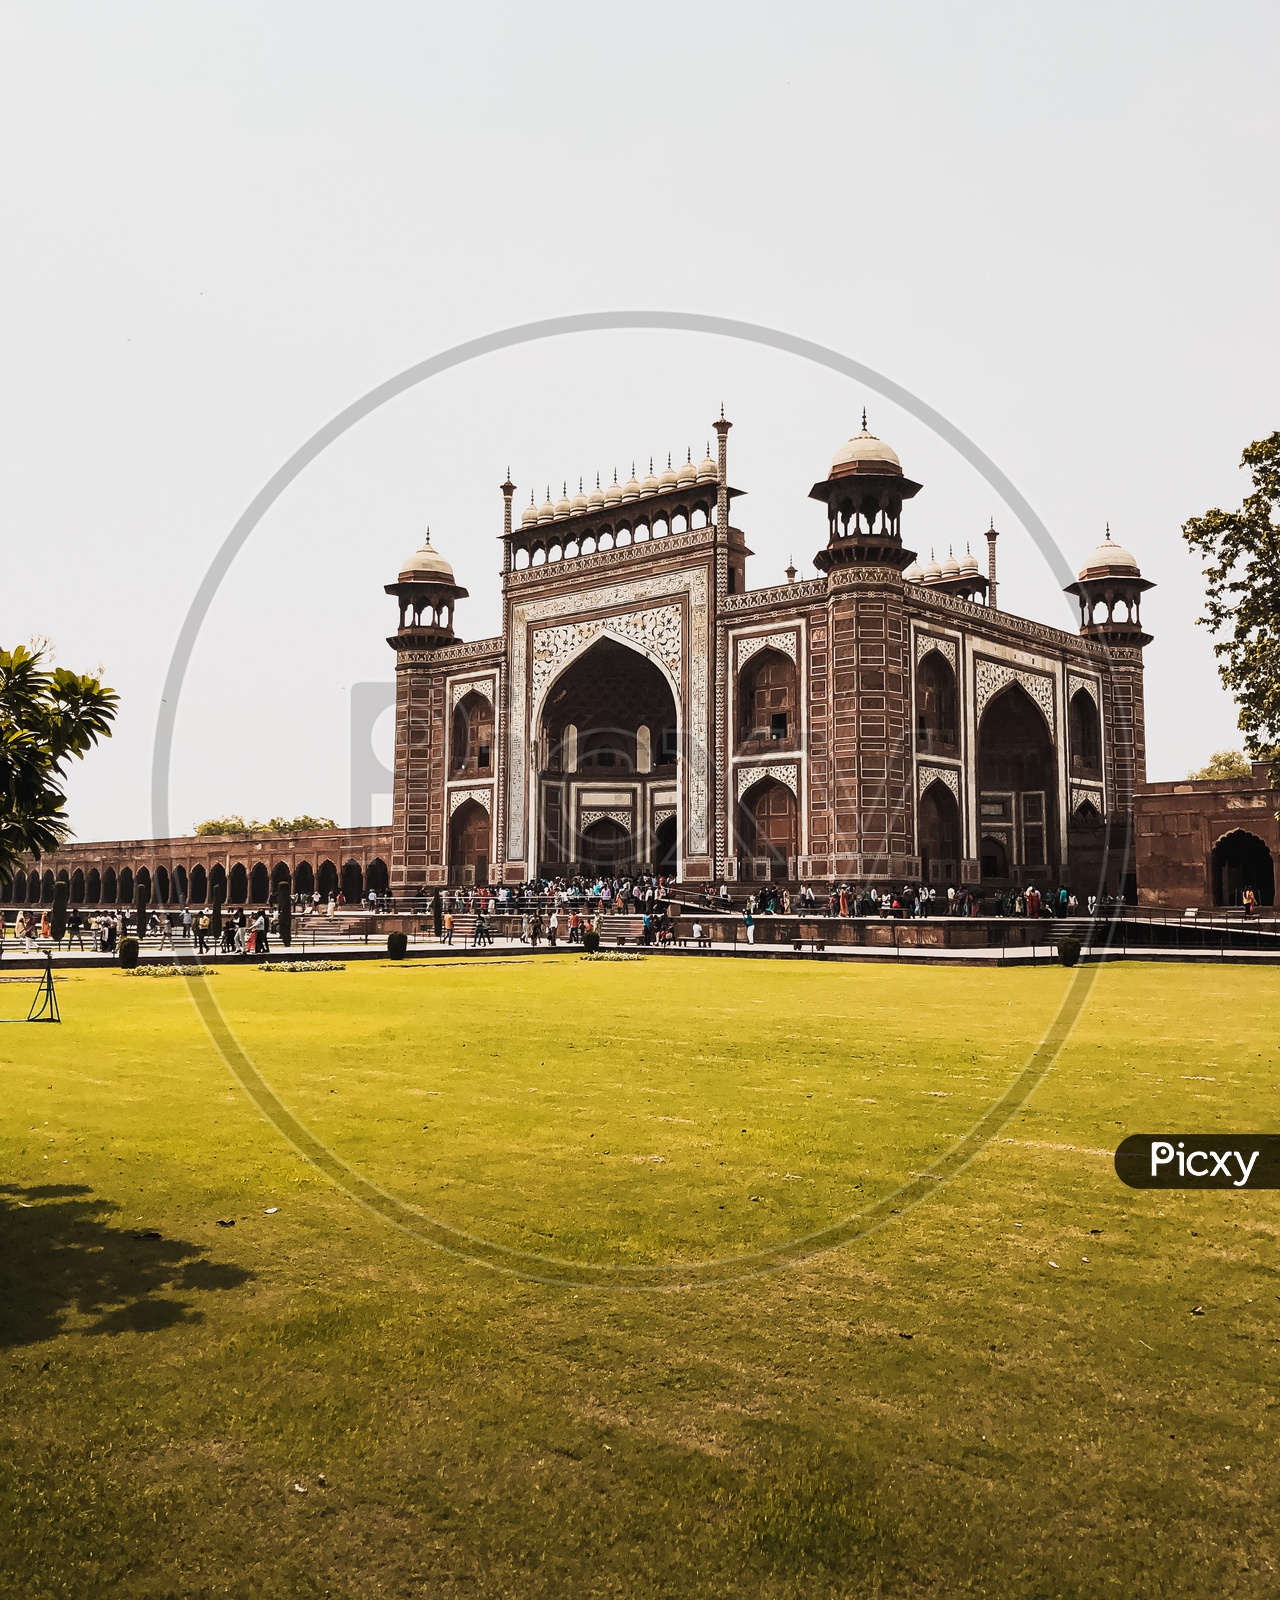 View of Courtyard alongside the Maingate of Taj Mahal